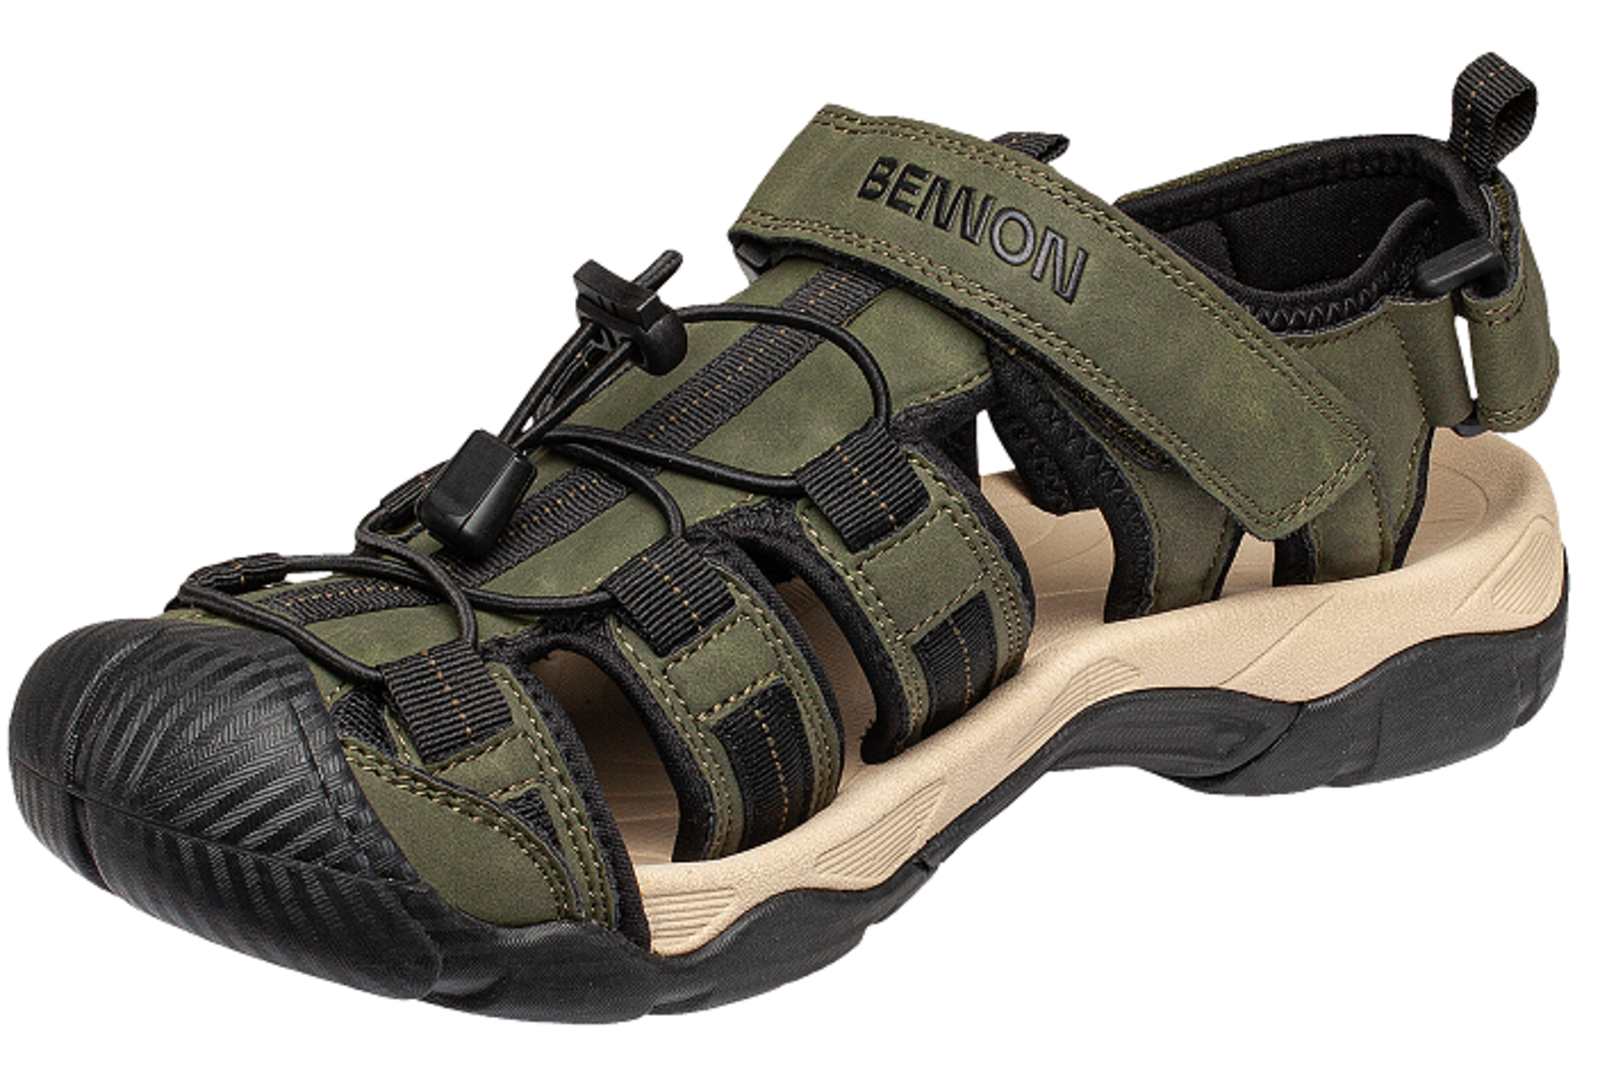 Ľahké sandále Bennon Amazon - veľkosť: 42, farba: zelená